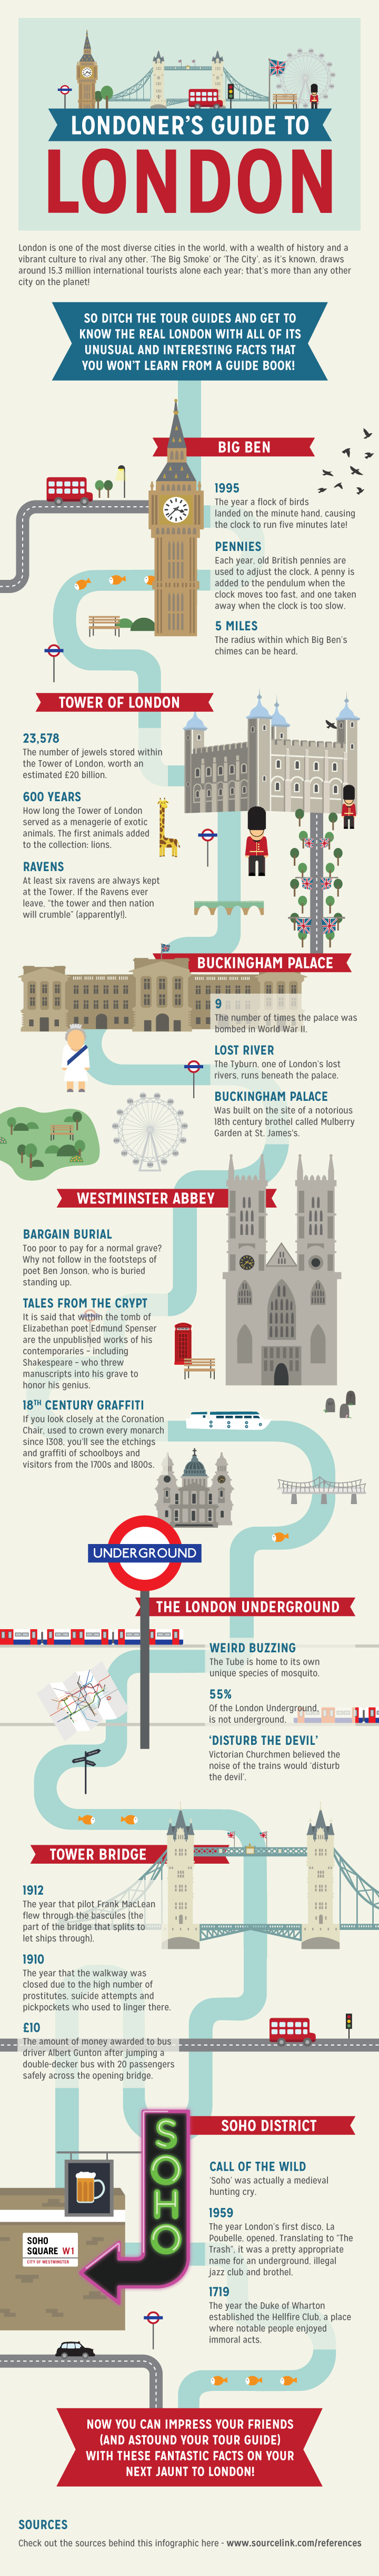 Facts on Londoner's Guide Timeline